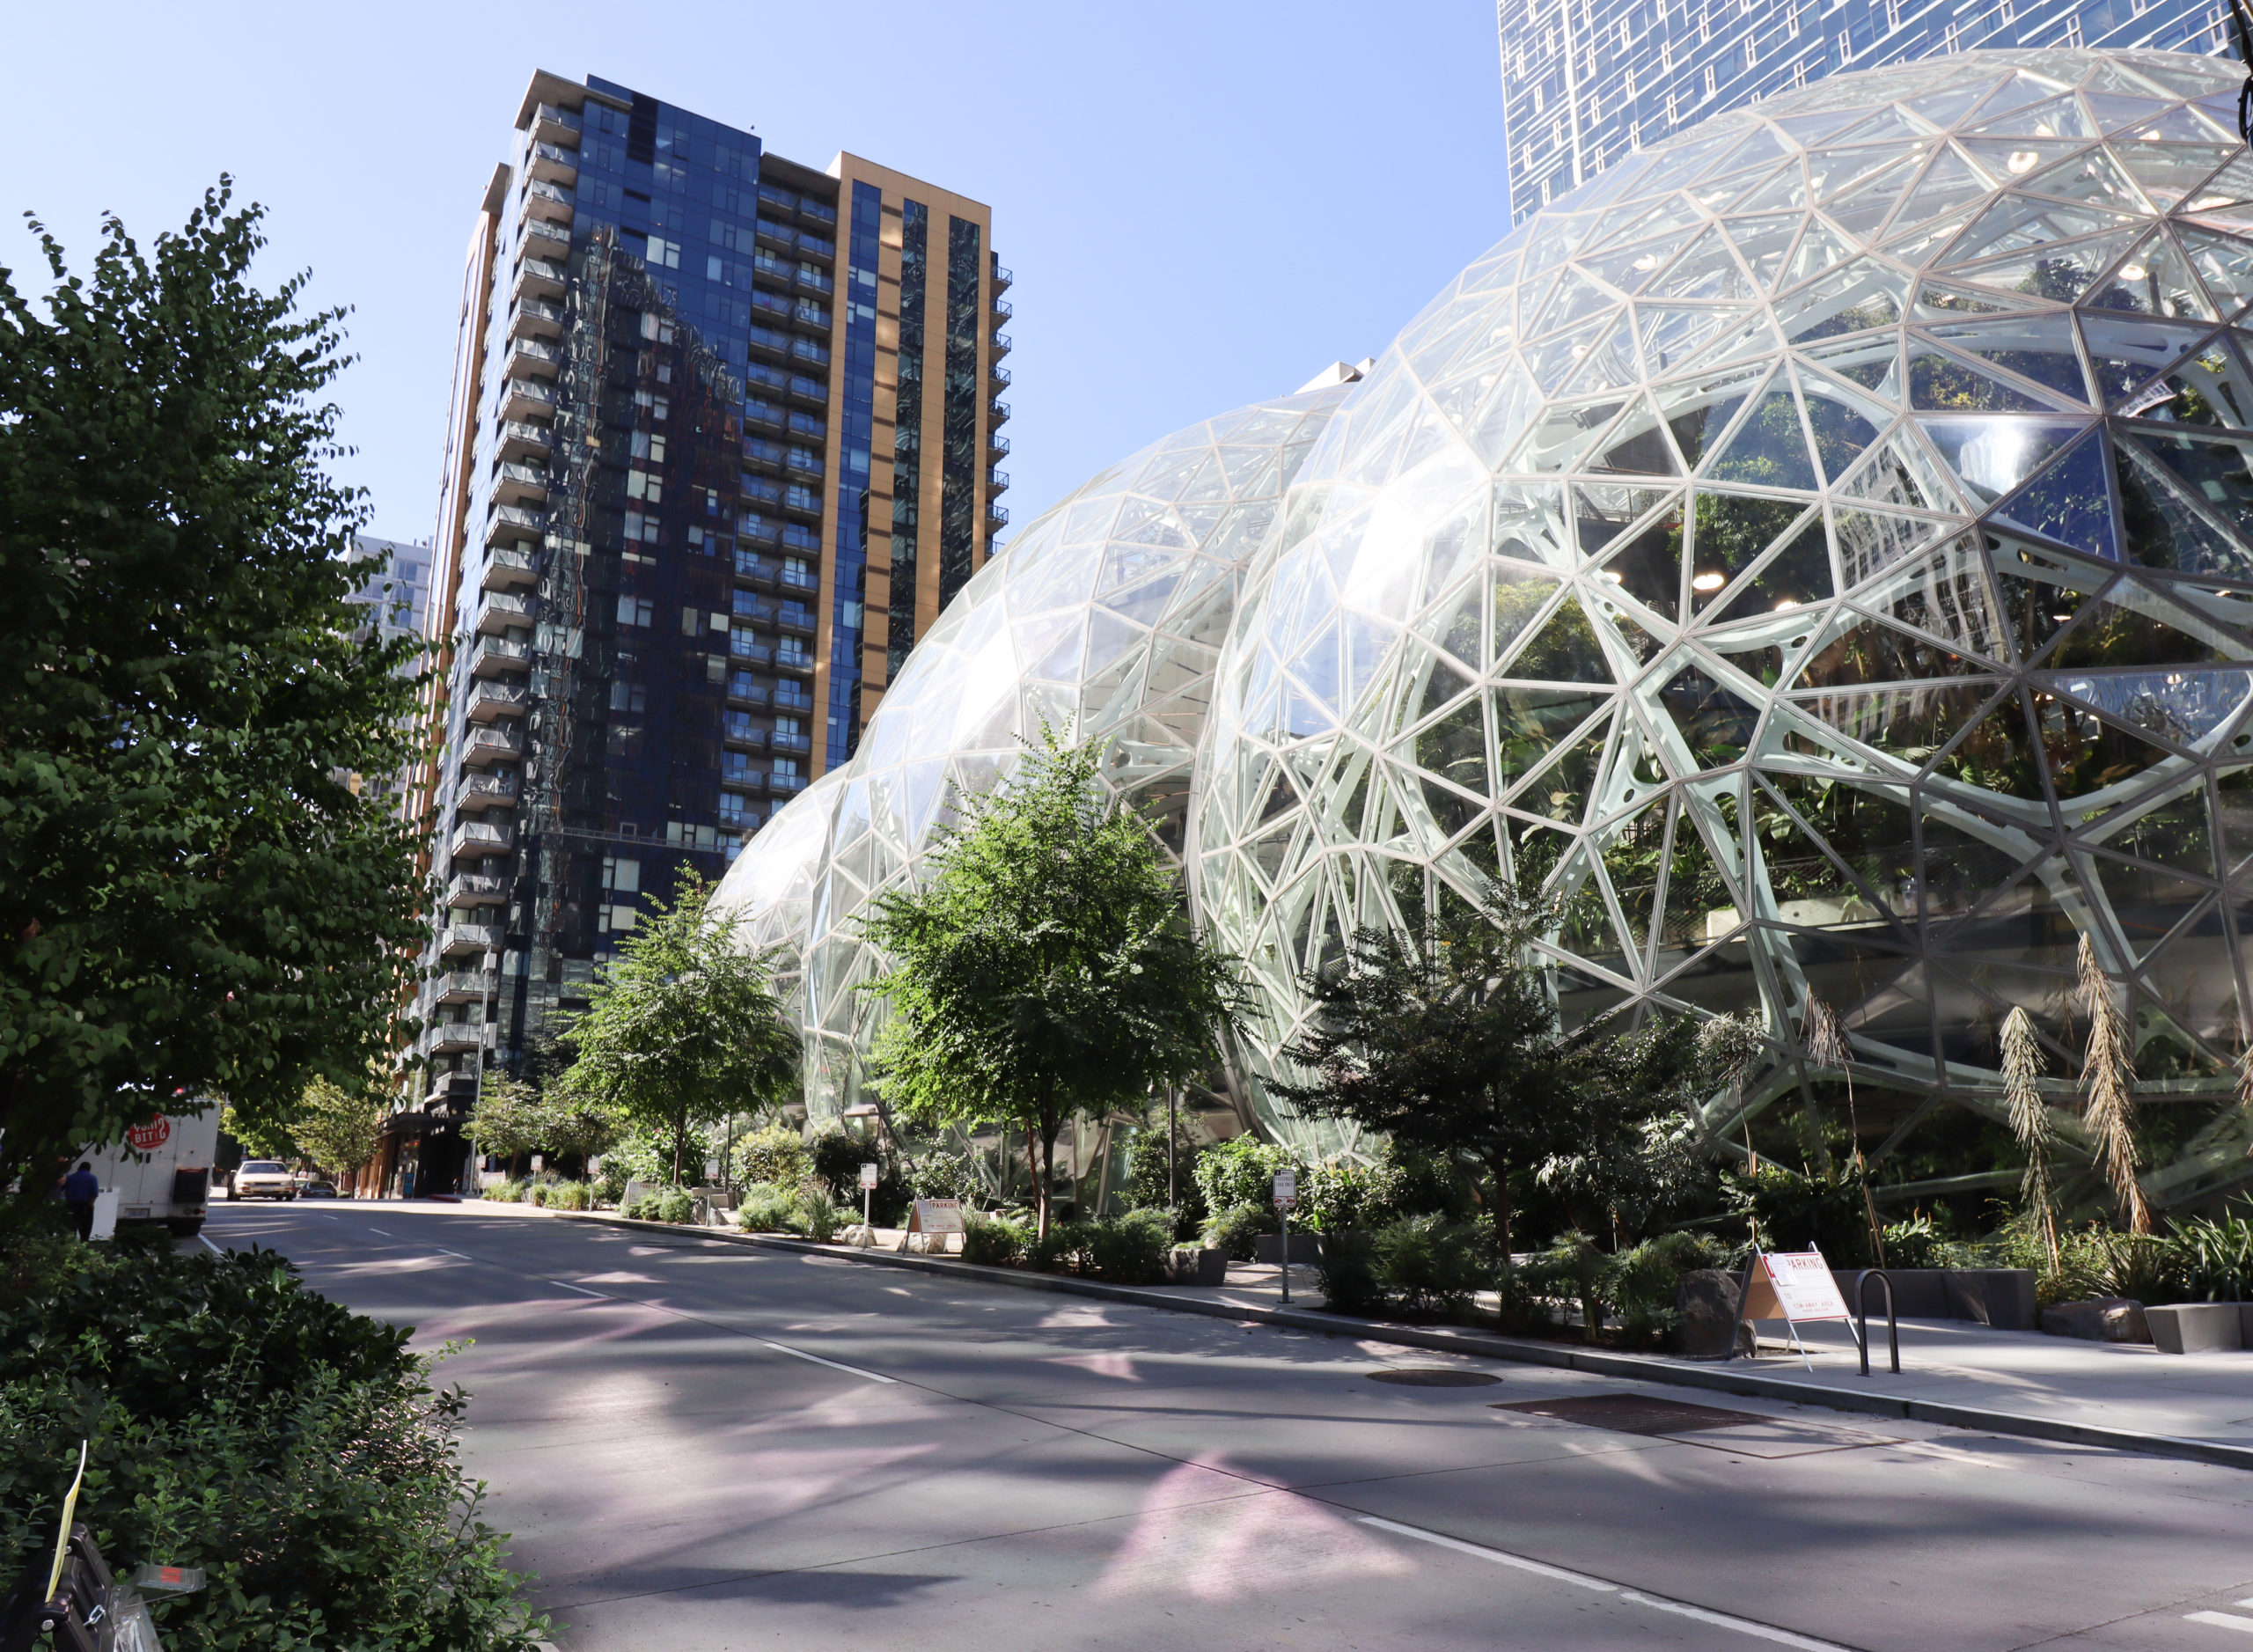 Amazon Spheres in Seattle